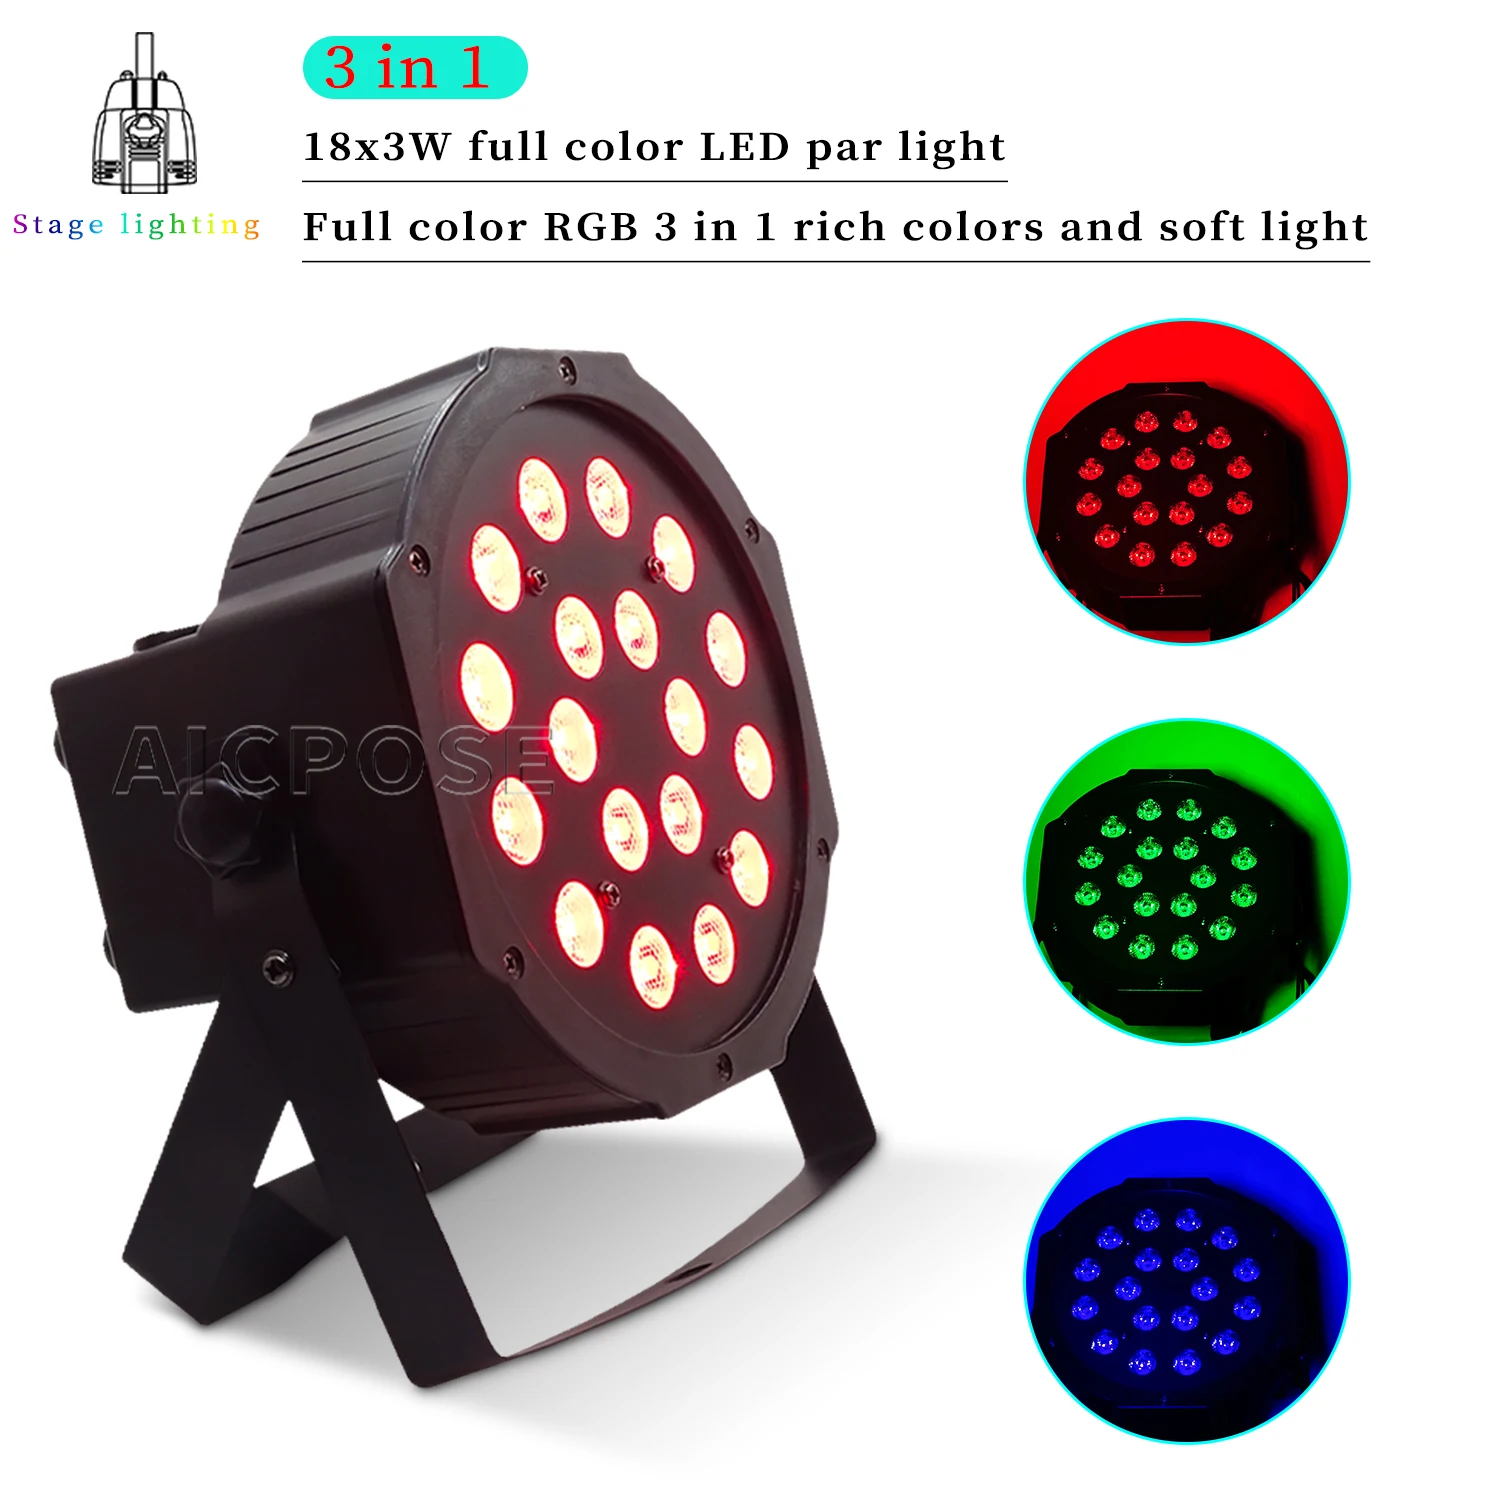 18x3W RGB 3 in 1 LED Par Light Stage Flat Spot Light DMX512 Control For Party Dance Studio DJ Disco Stage Lighting